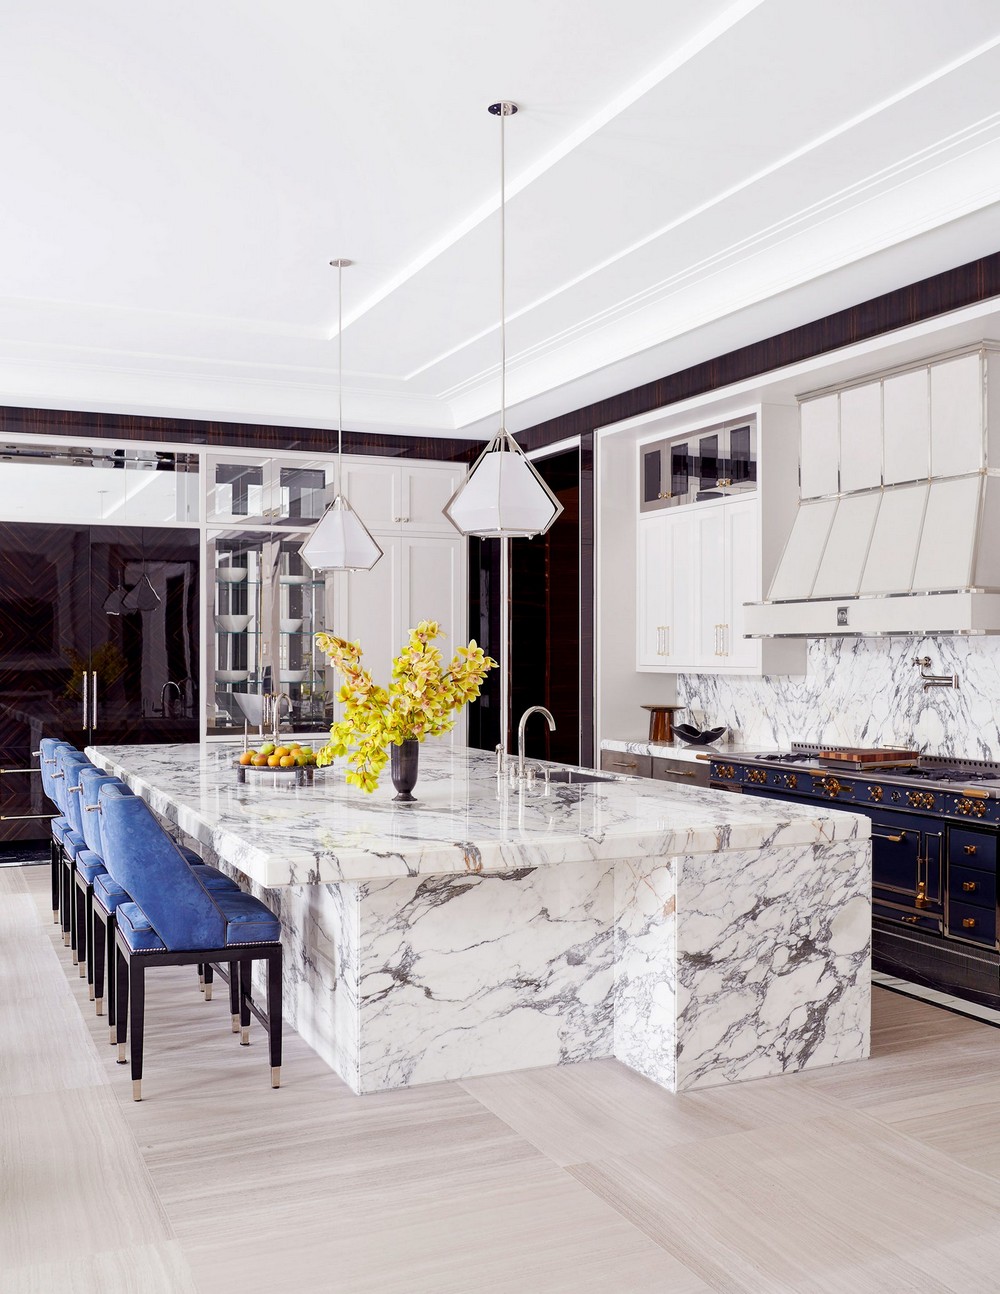 Ferris Rafauli Marvelously Designs Drake's Manor House in Toronto 1